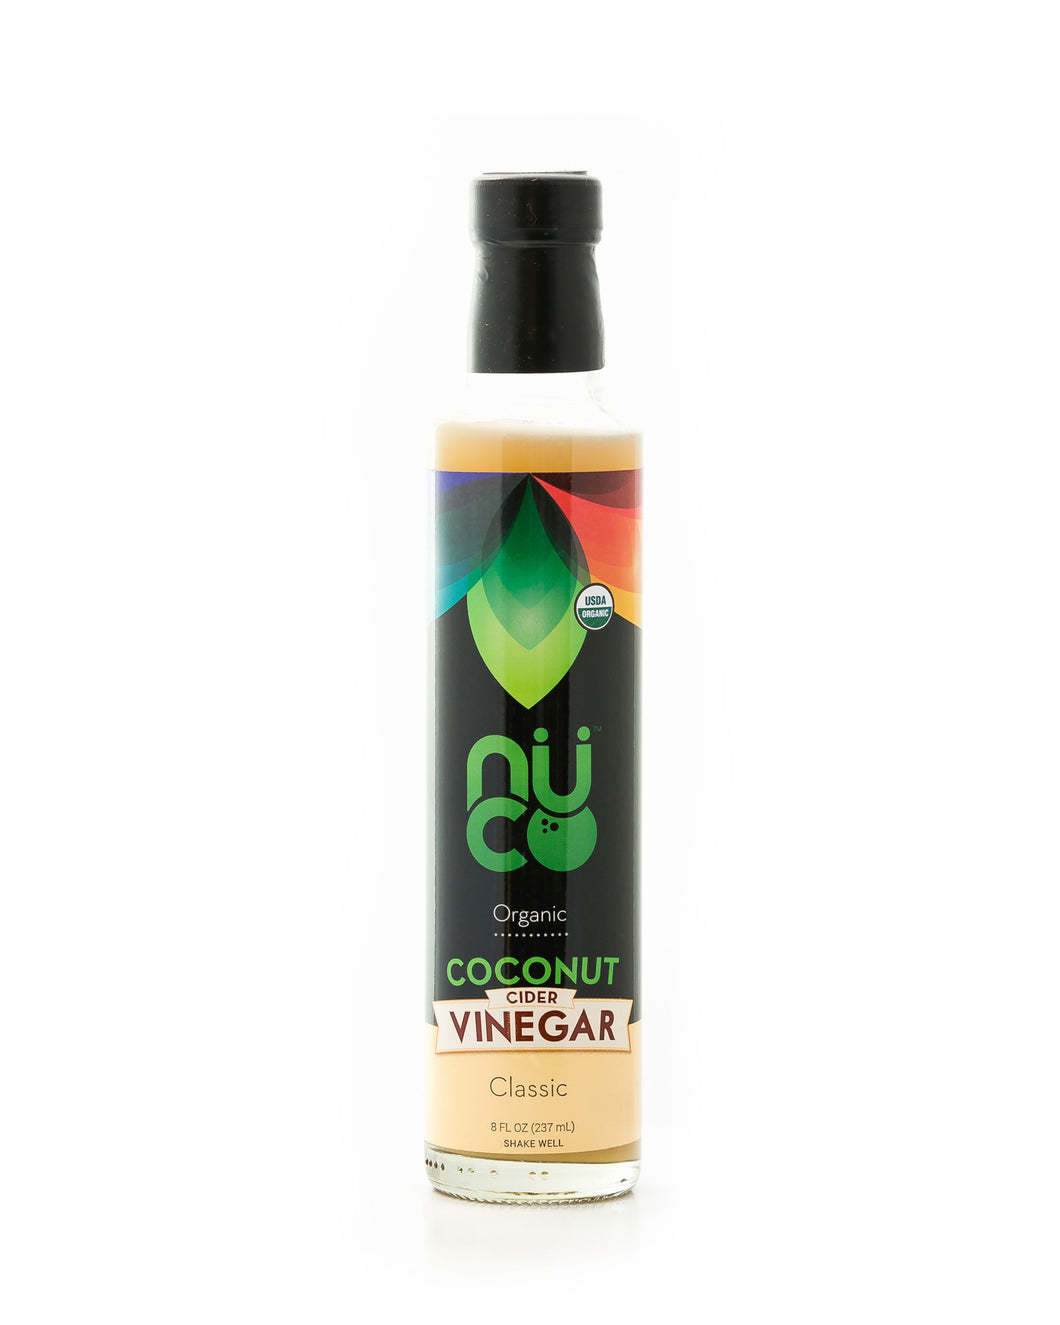 NUCO Organic Coconut Vinegar, with Mother (8 FL OZ)